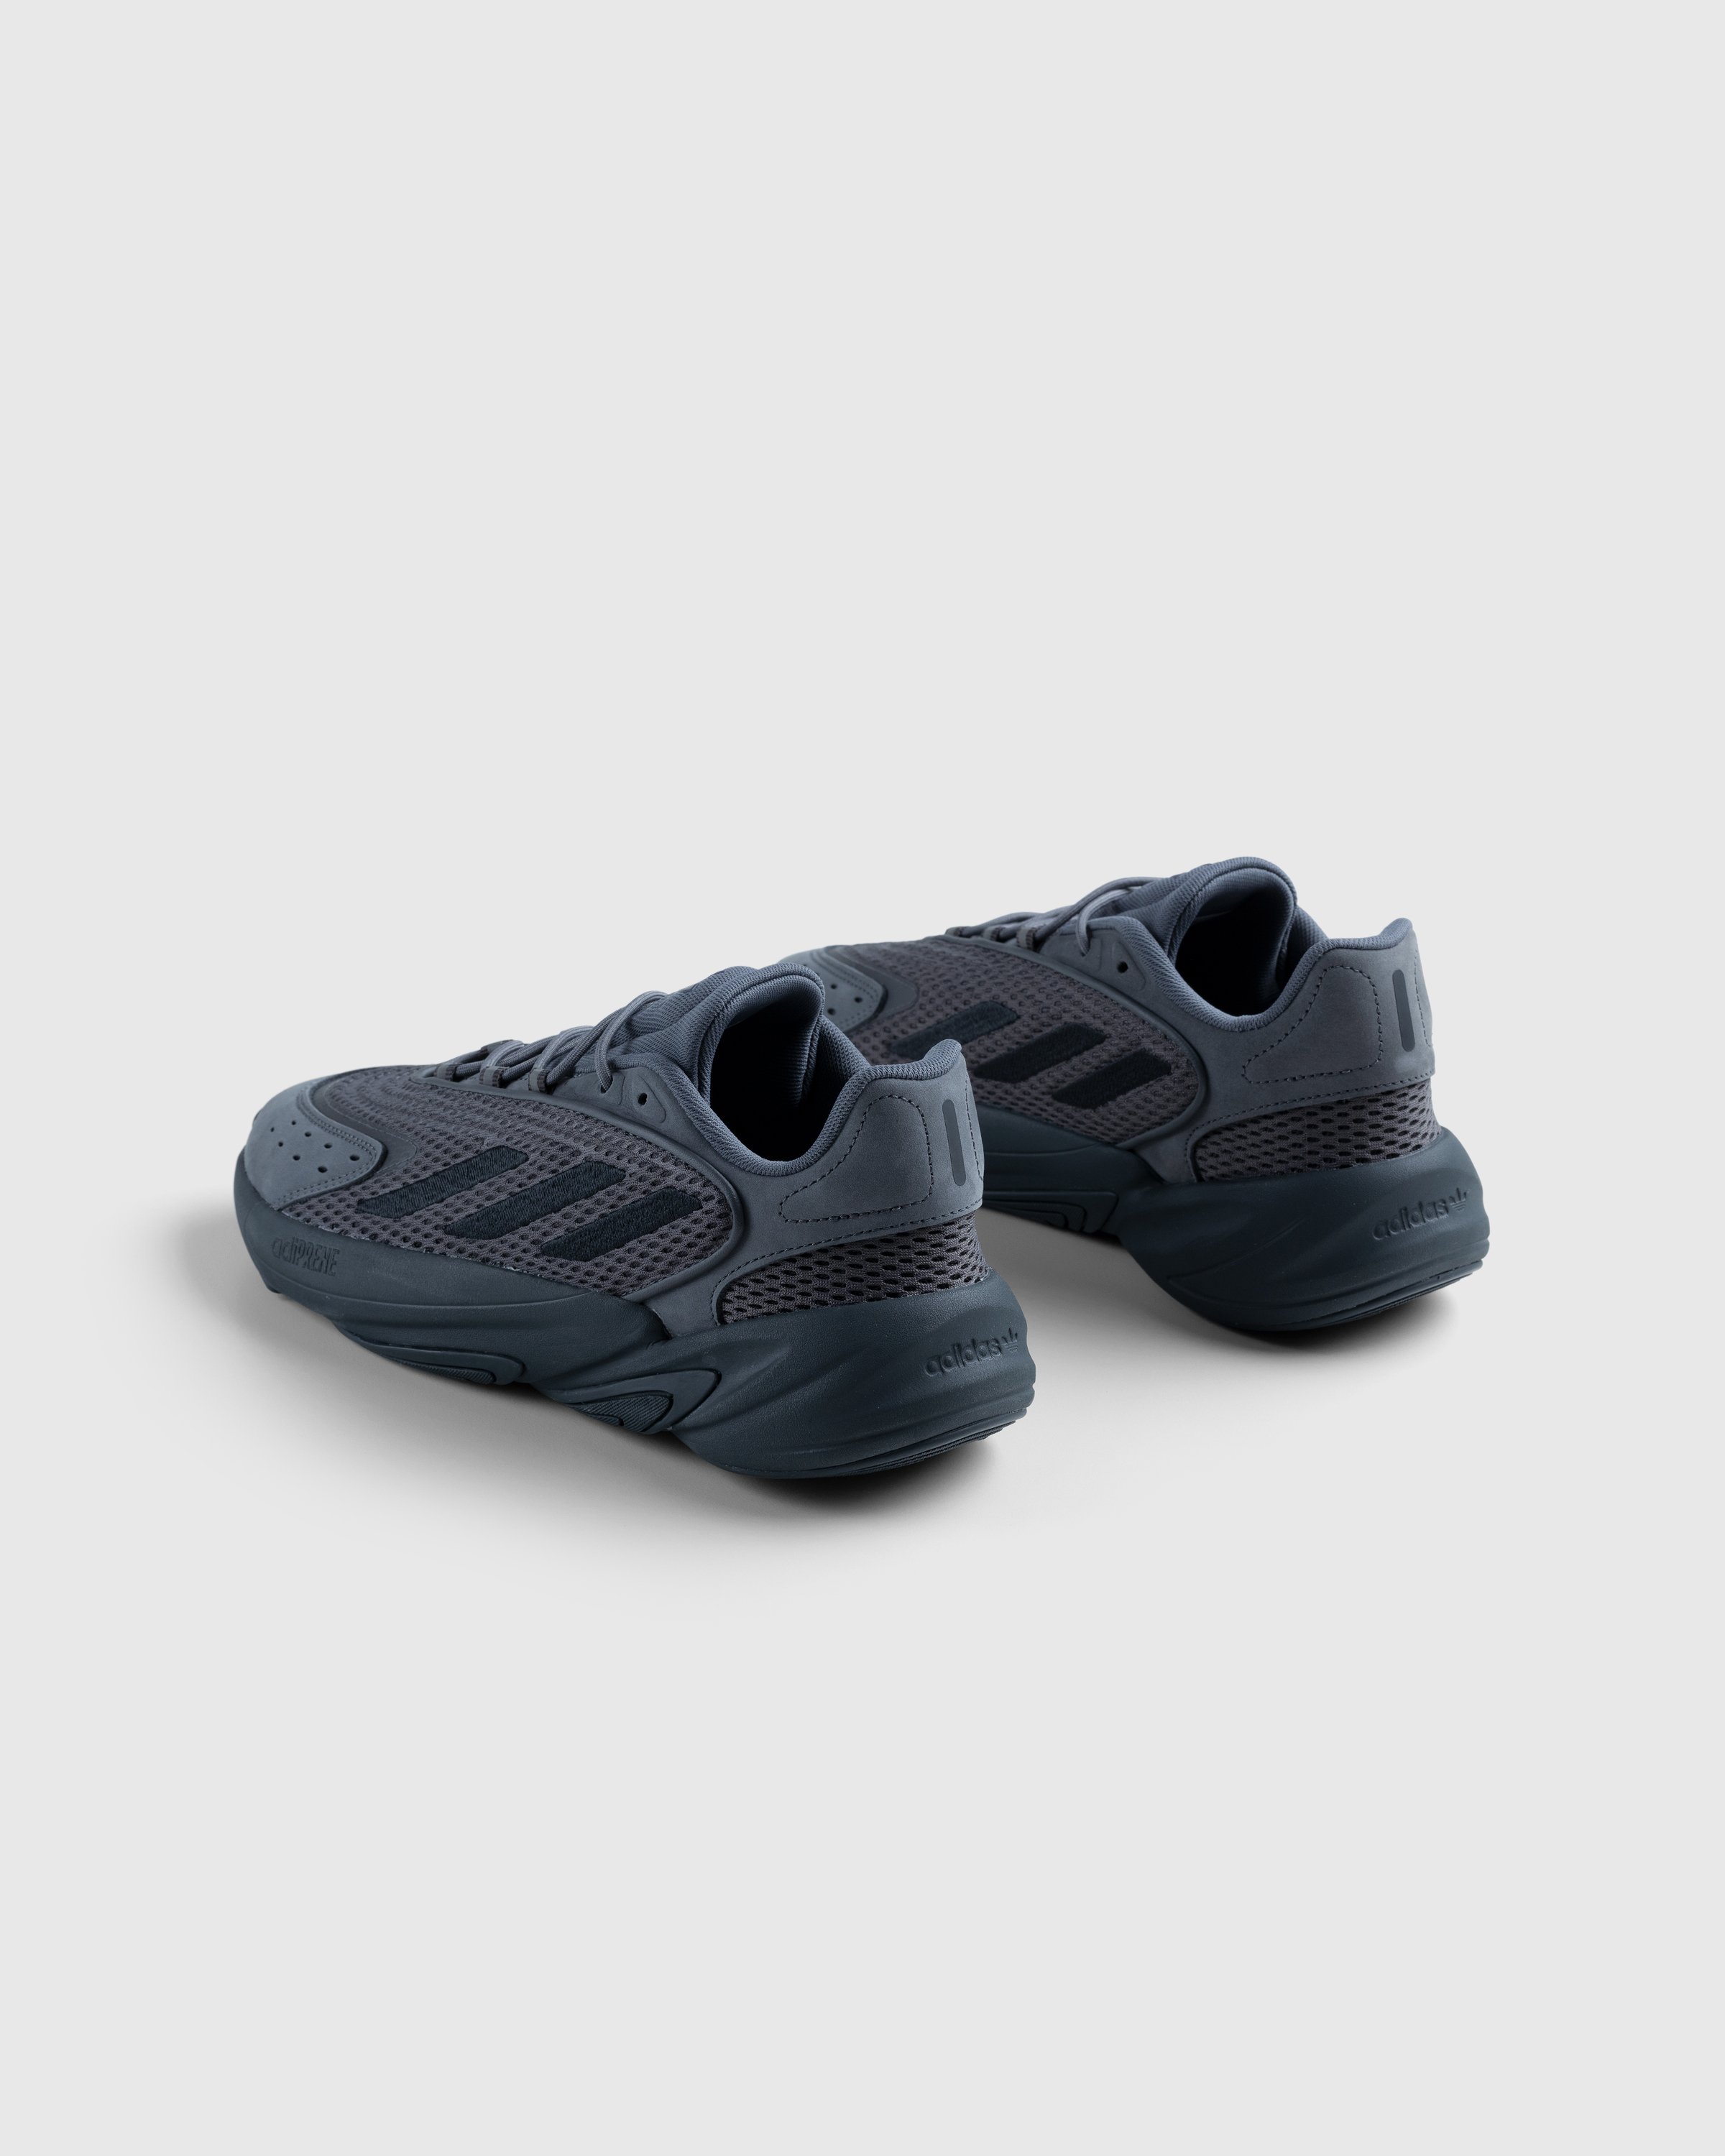 Adidas - Ozelia Grey/Carbon - Footwear - Black - Image 4